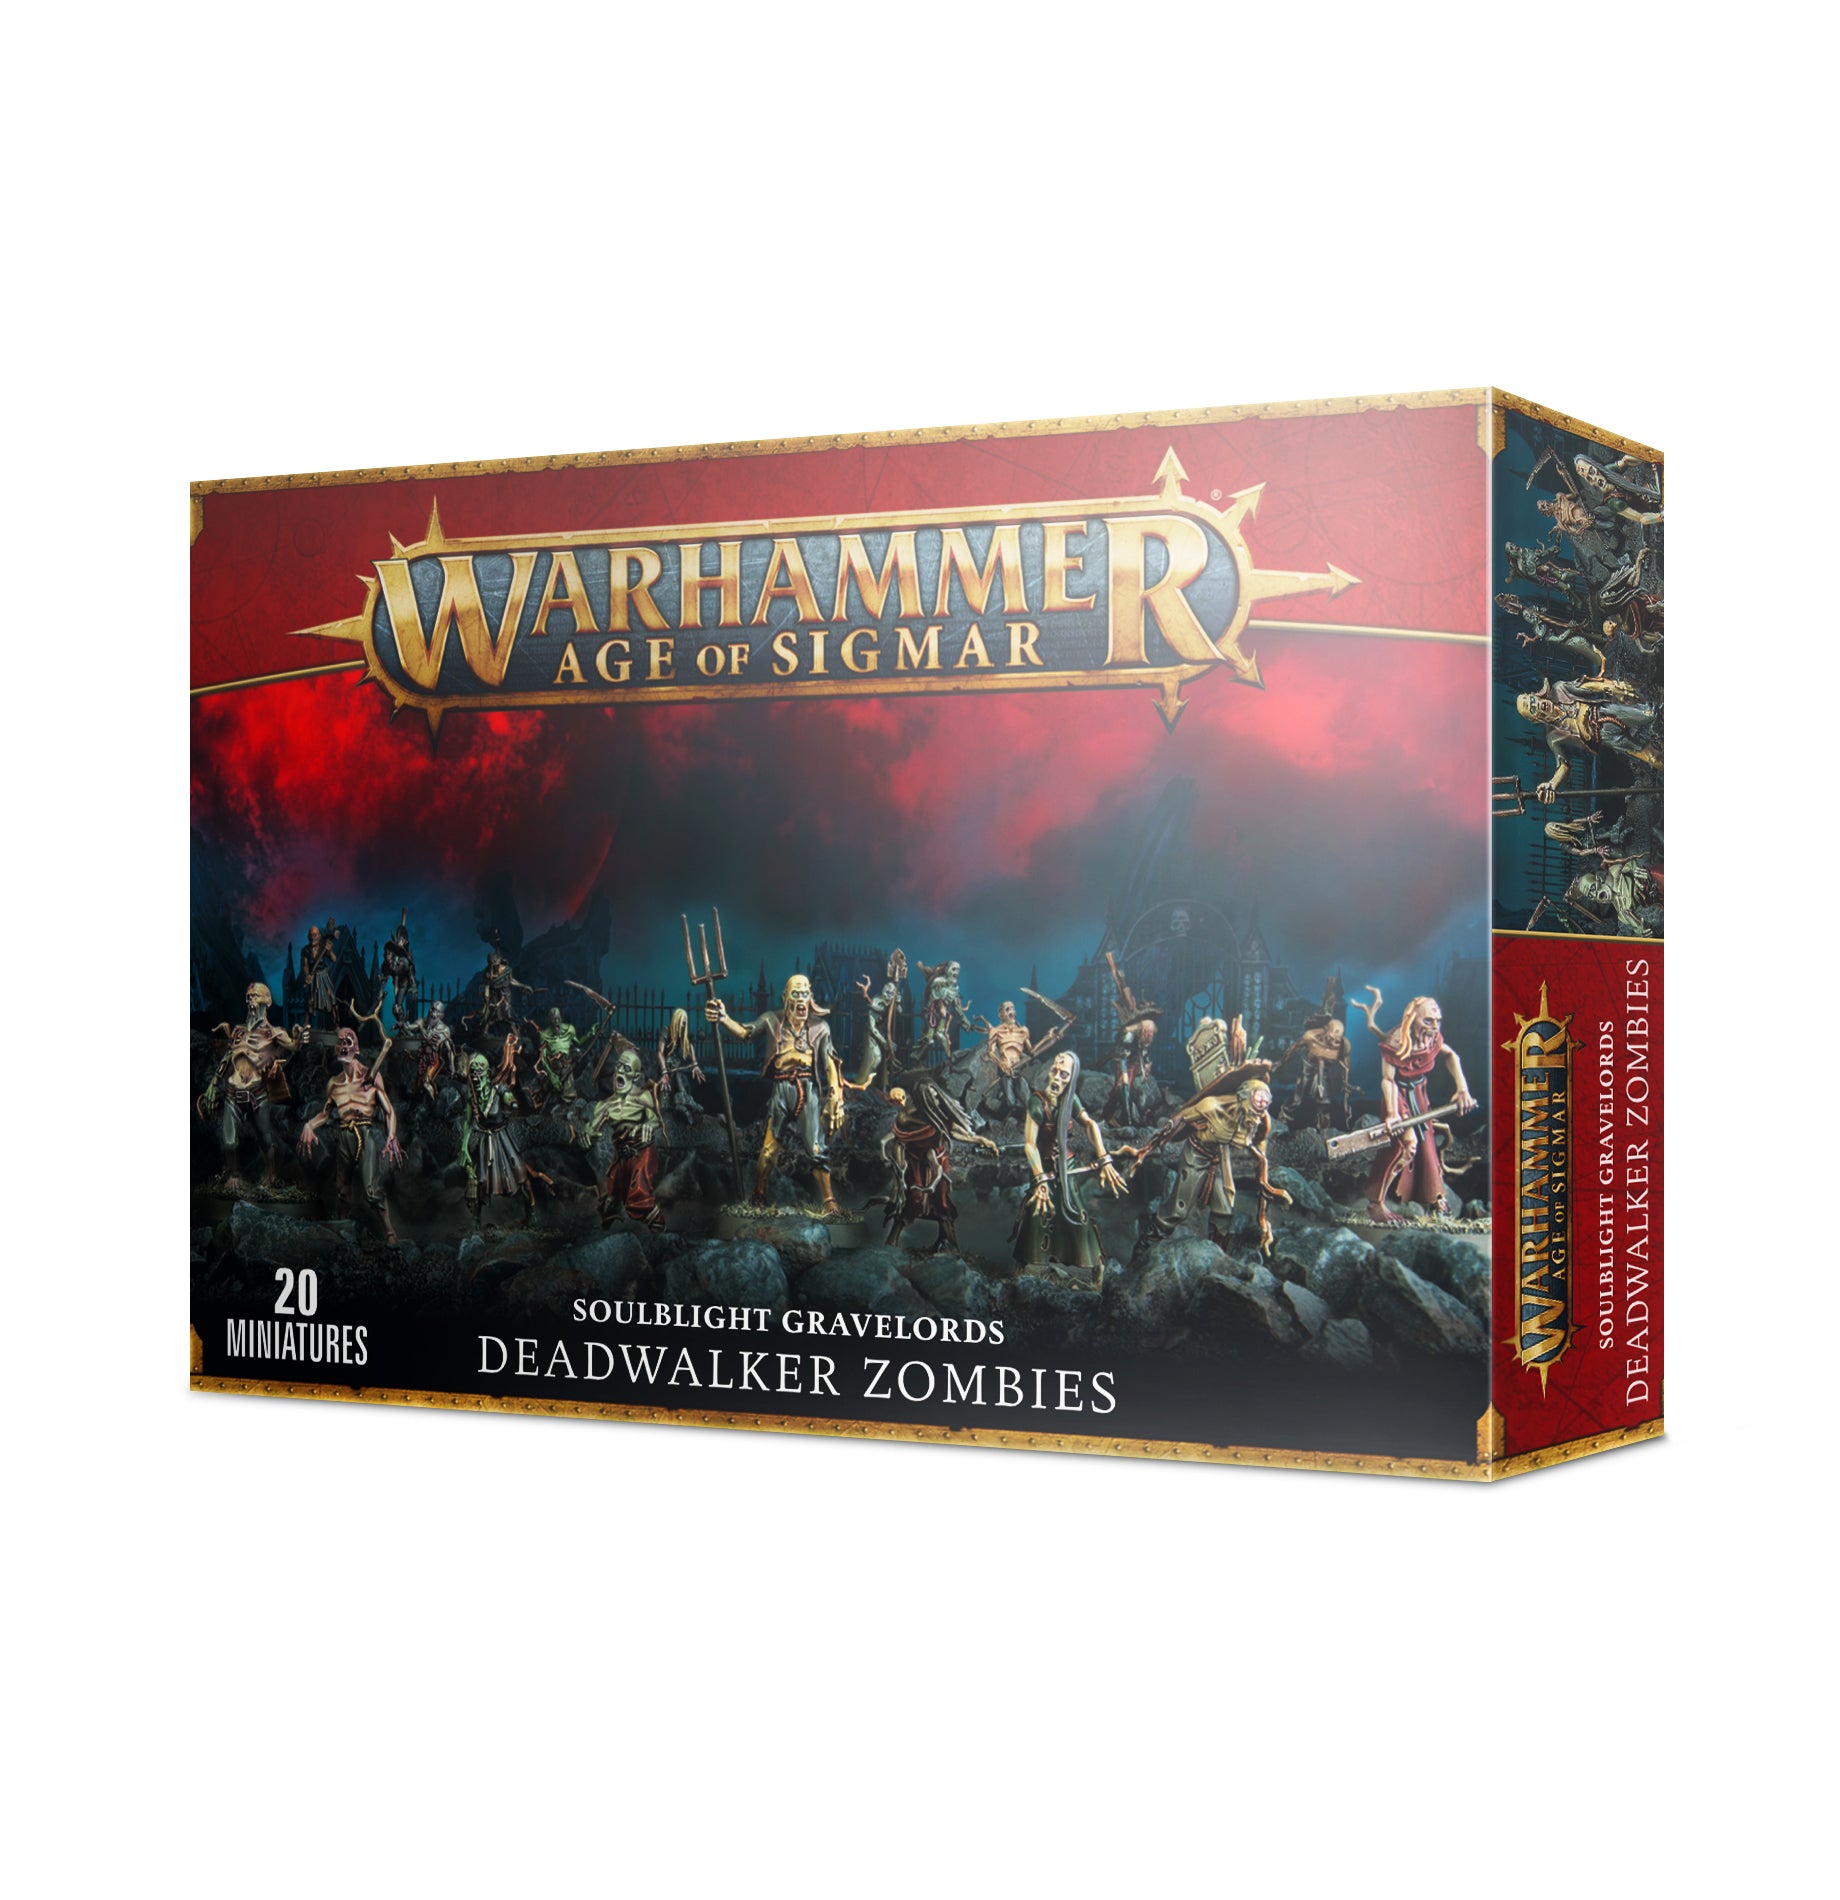 Warhammer Age of Sigmar: Soulblight Gravelords Deadwalker Zombies